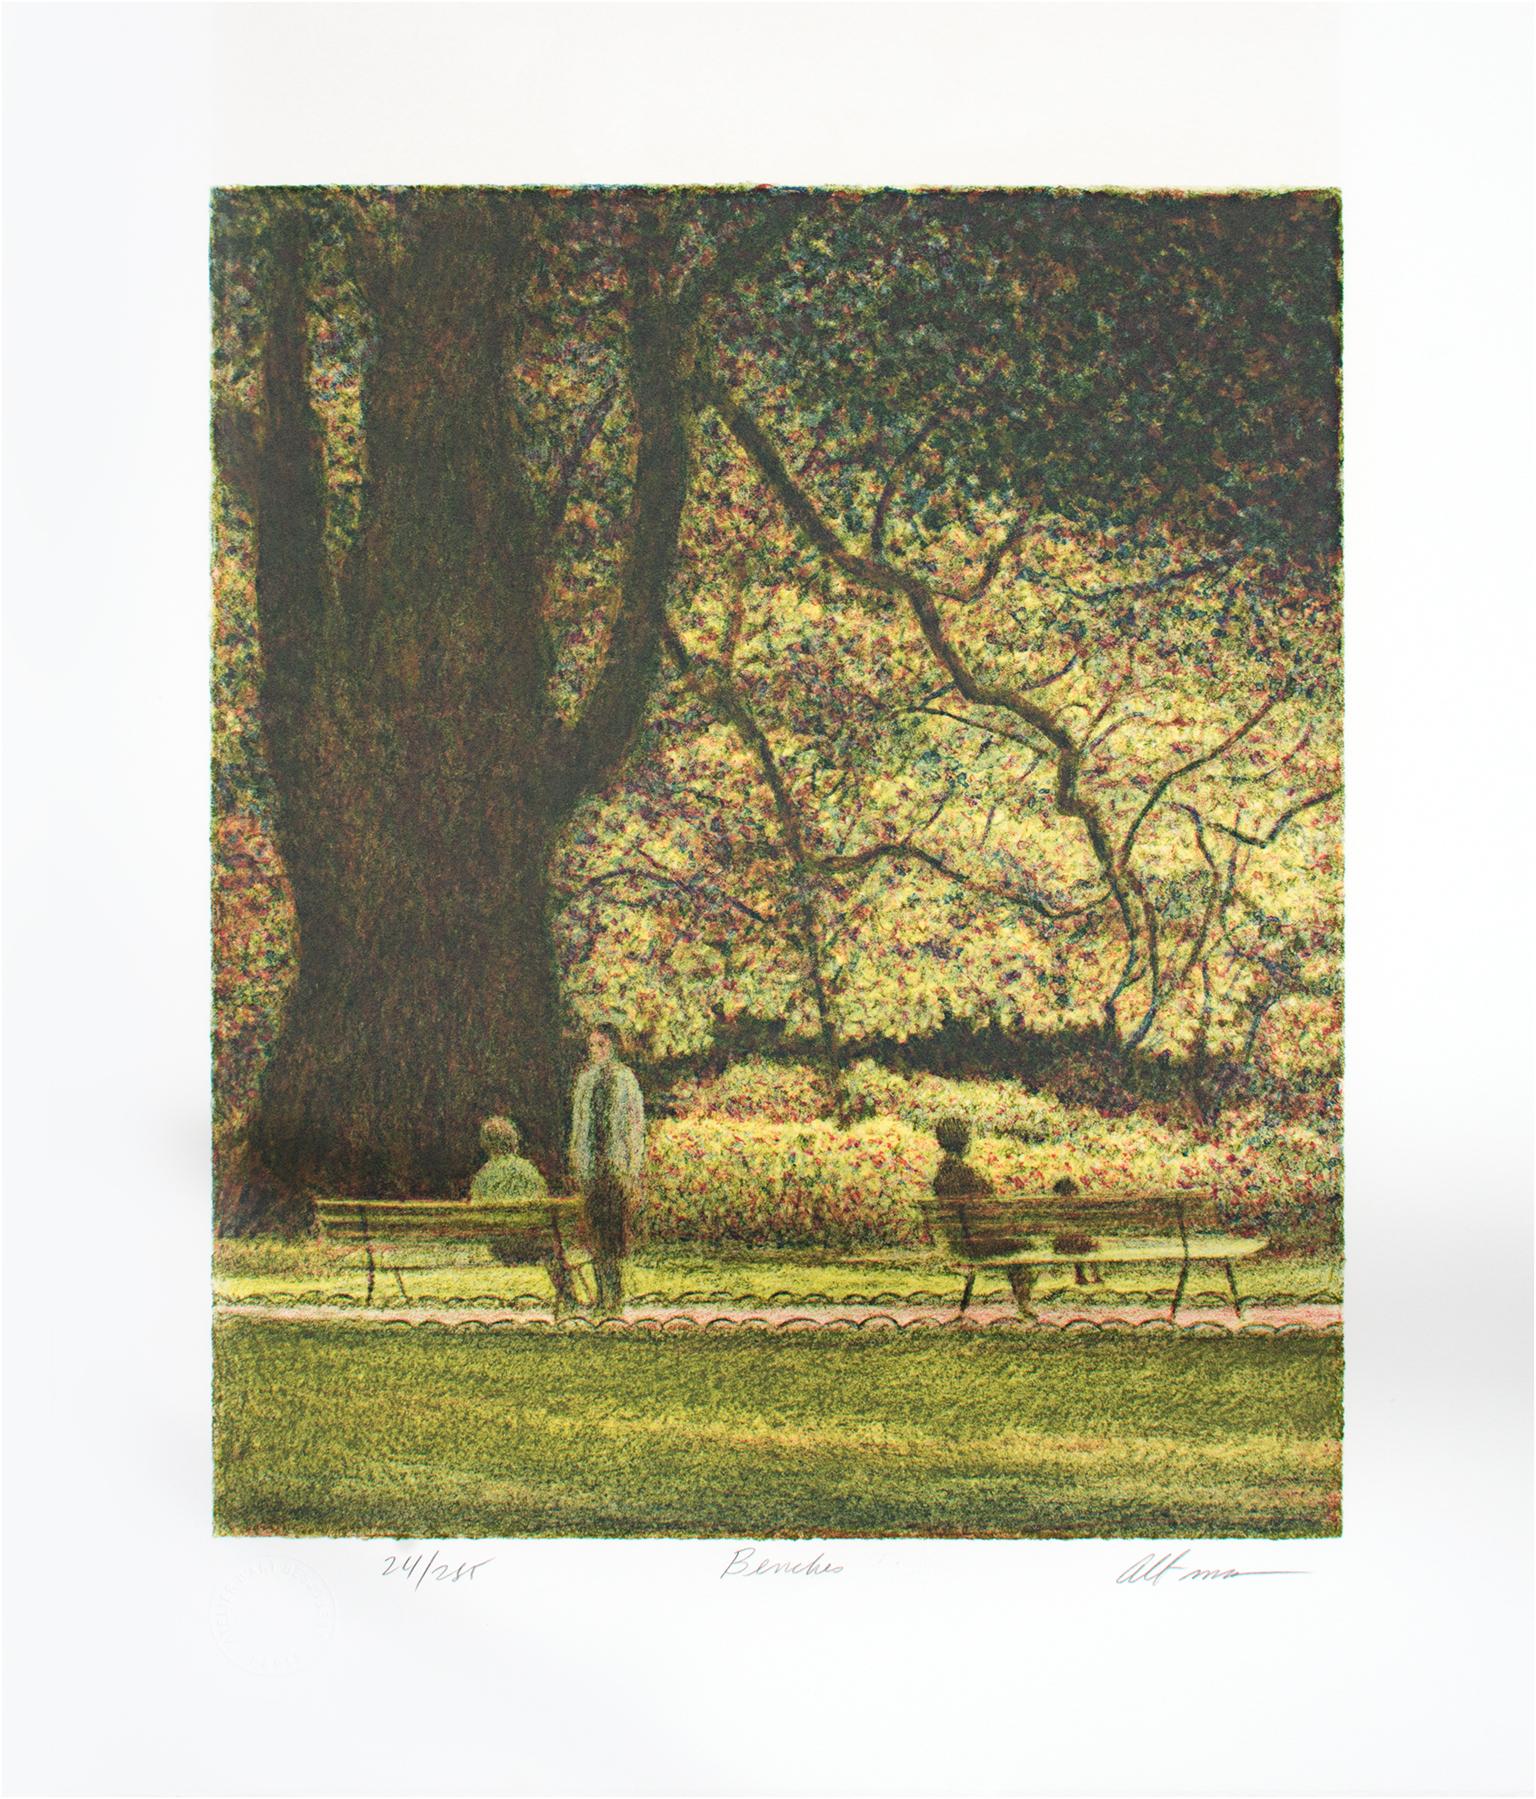 Harold Altman Figurative Print - Contemporary color lithograph landscape trees outdoor forest park scene signed